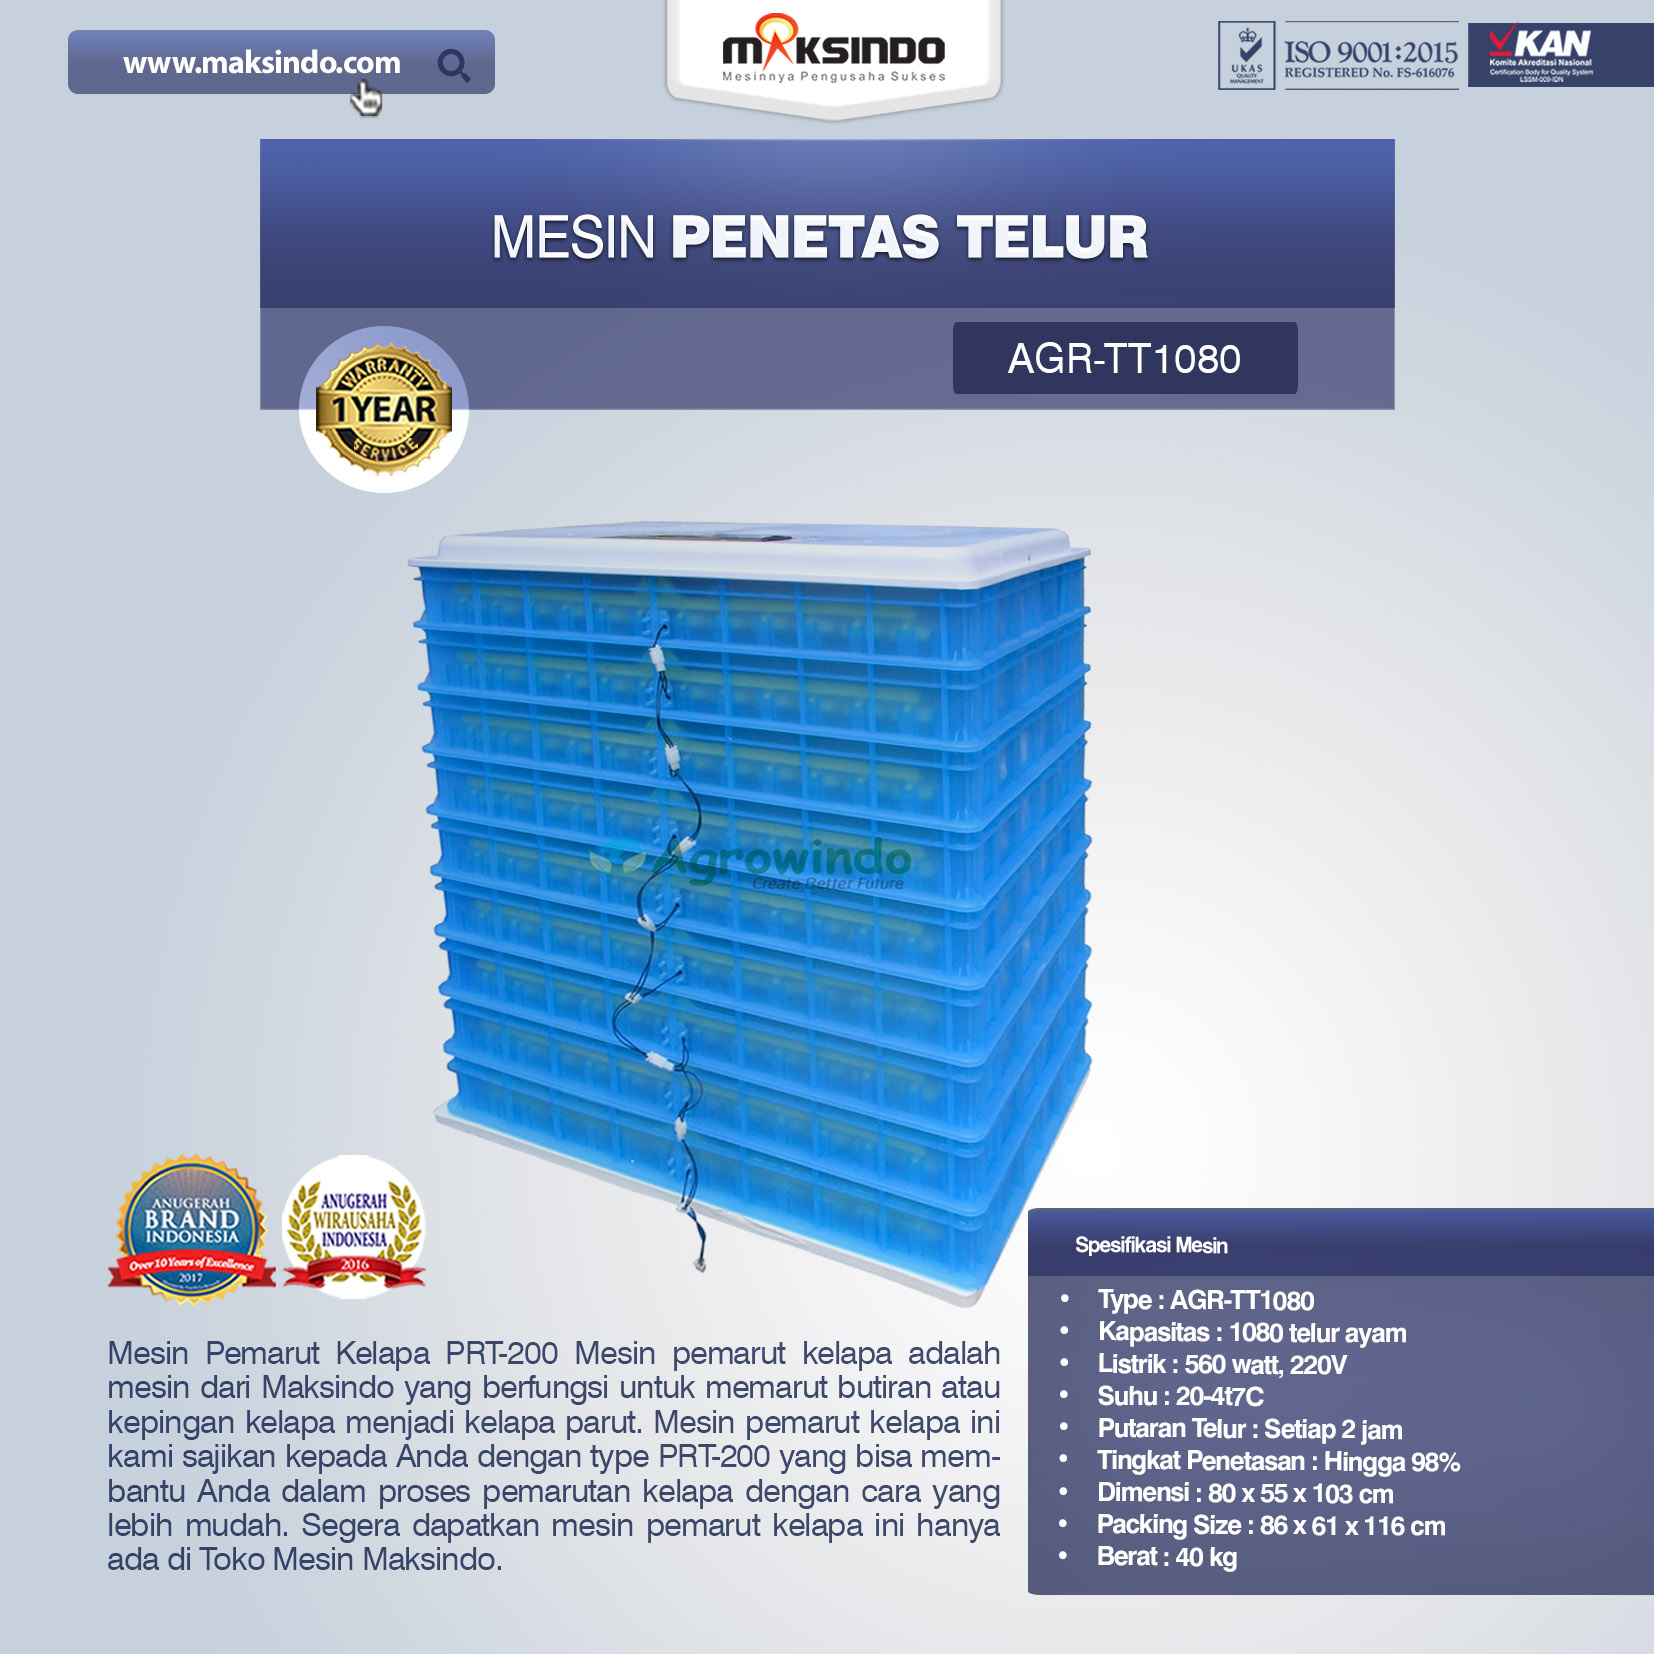 Jual Mesin Penetas Telur AGR-TT1080 Di Medan